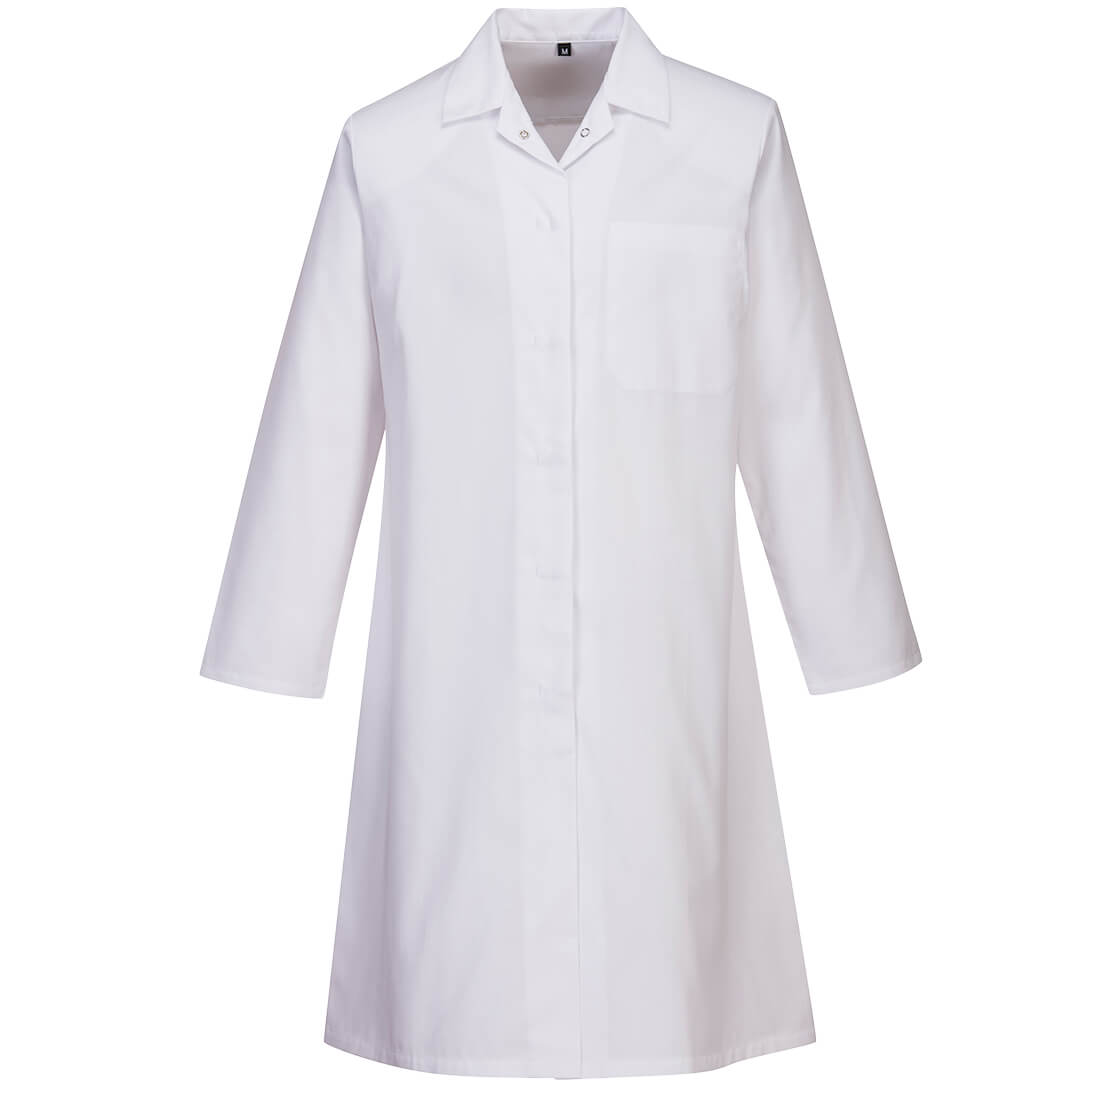 Portwest 2205 - White Ladies Food Industry Coat, One Pocket sz XL Regular Apron jacket